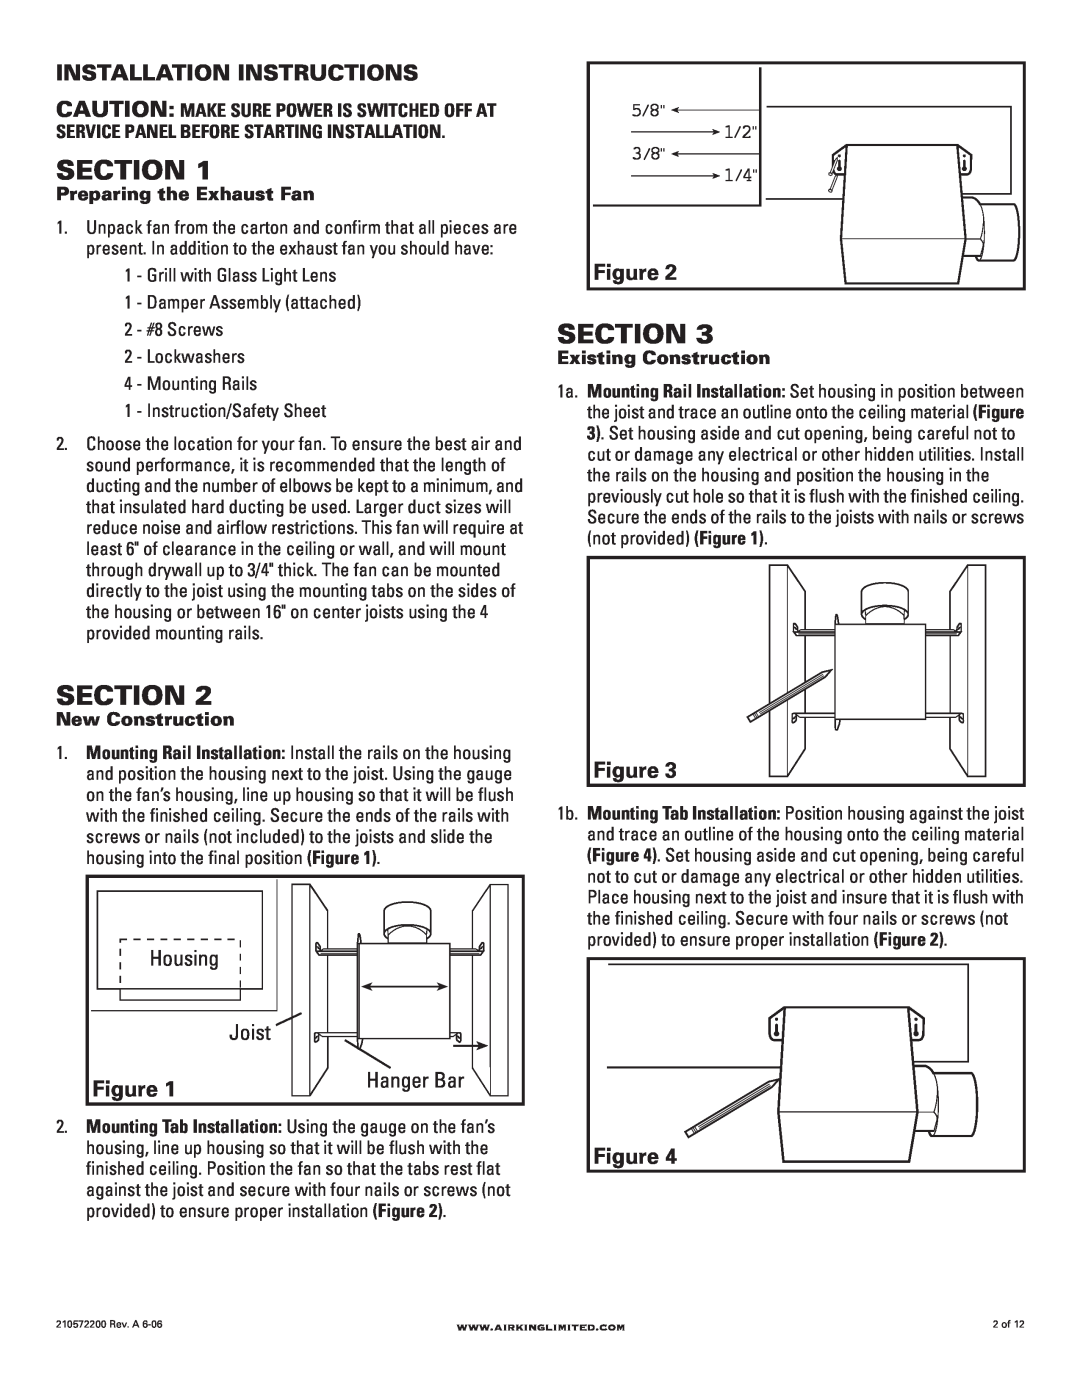 Air King AKLC702 manual Section, Installation Instructions, Figure, Housing, Joist, Hanger Bar, Preparing the Exhaust Fan 